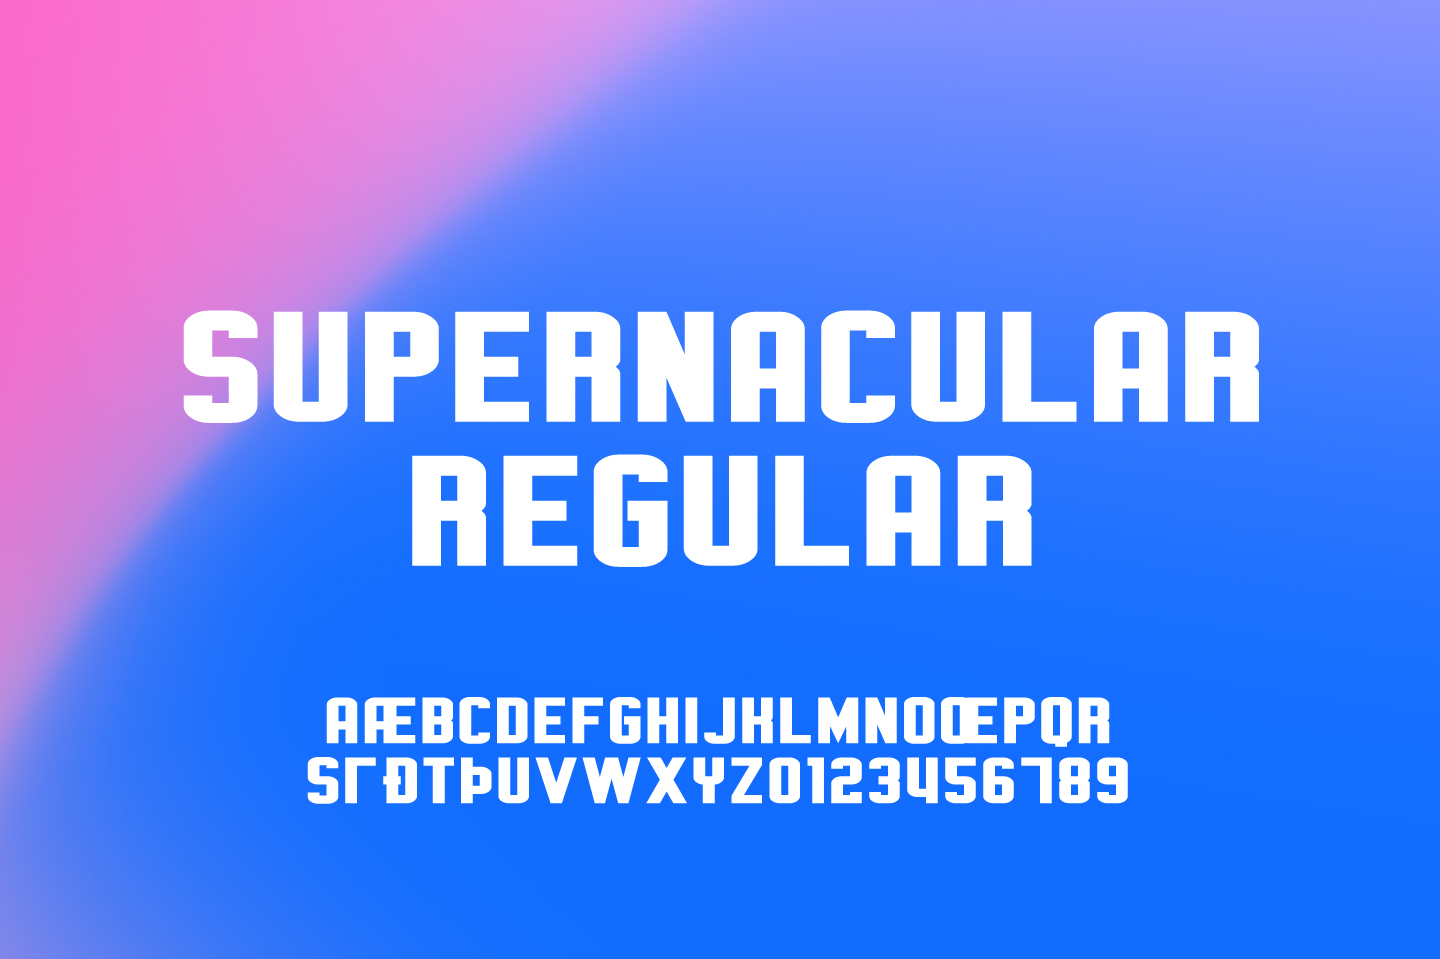 Supernacular